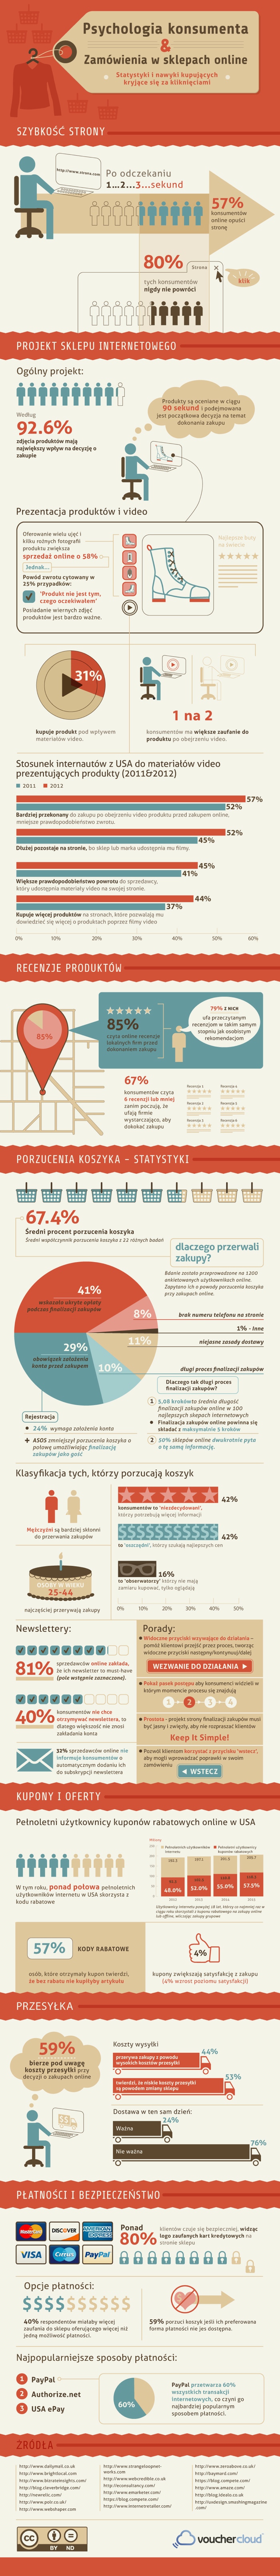 psychologia-konsumenta-infografika